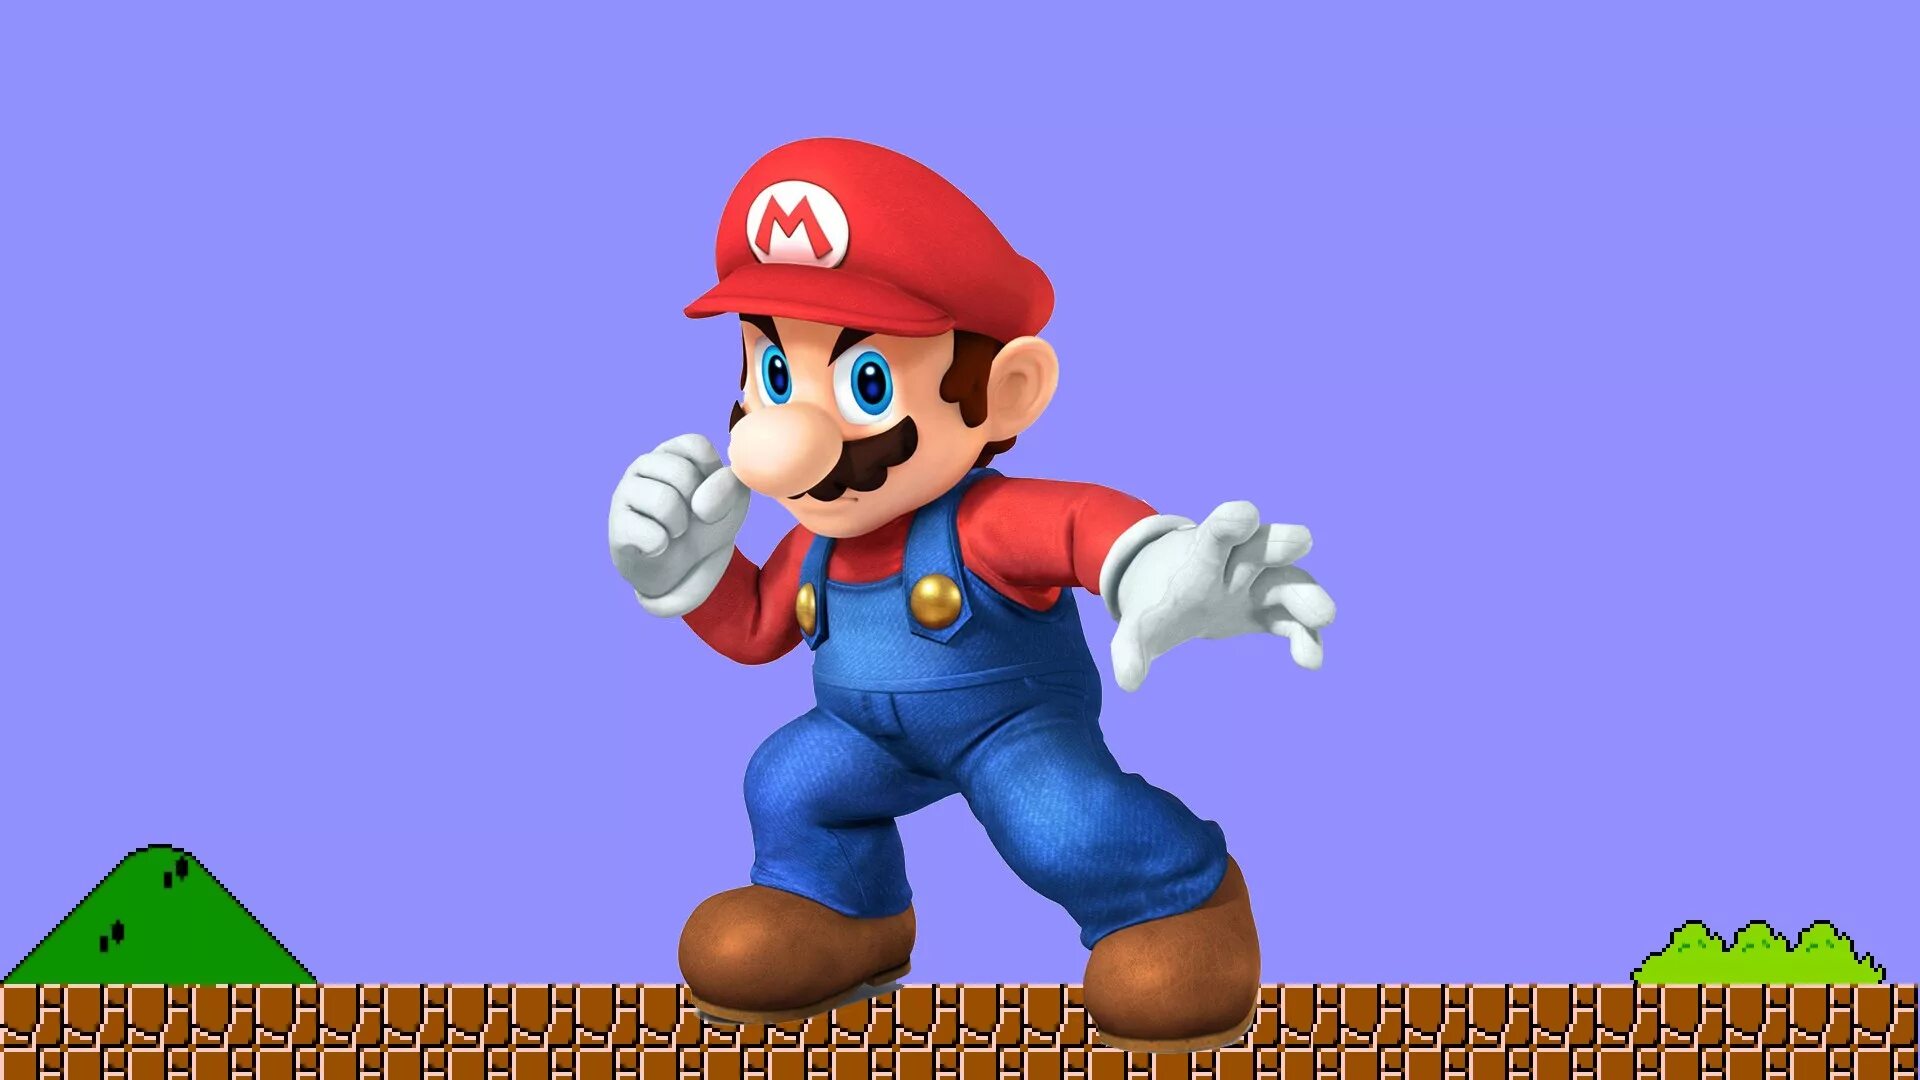 Марио персонажи. Персонажи из игры Марио Денди. Марио персонаж игр 2д. Марио (персонаж игр) персонажи игр Mario.